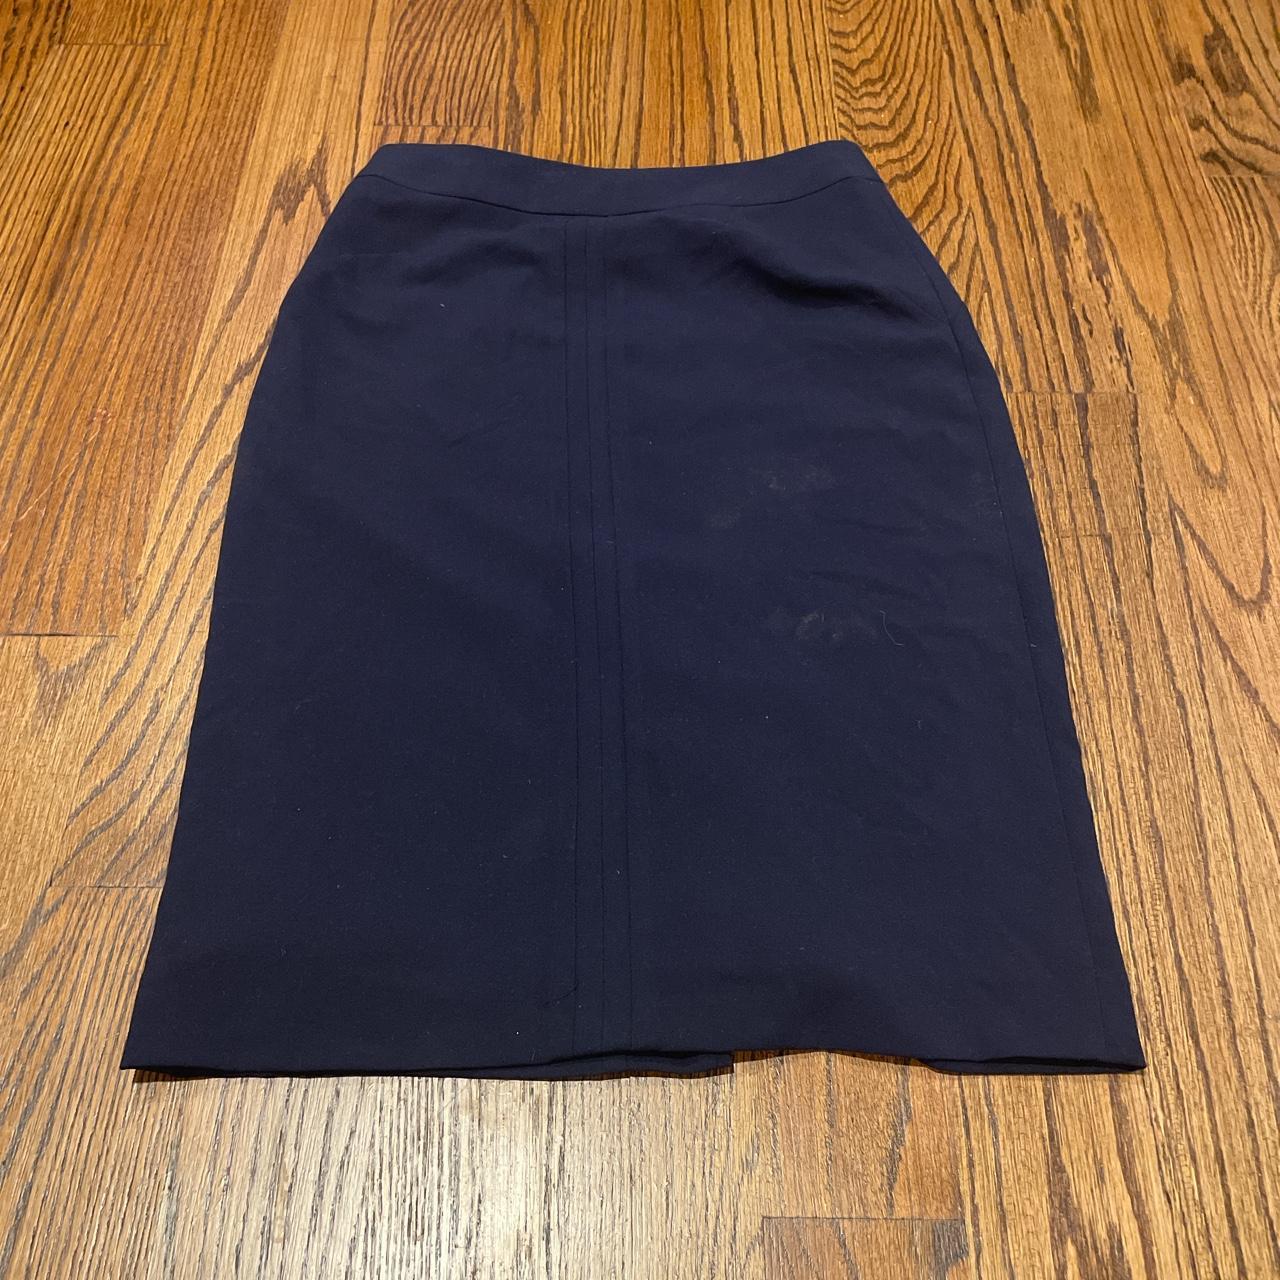 Antonio Melani Size 2 Navy Skirt #skirt - Depop